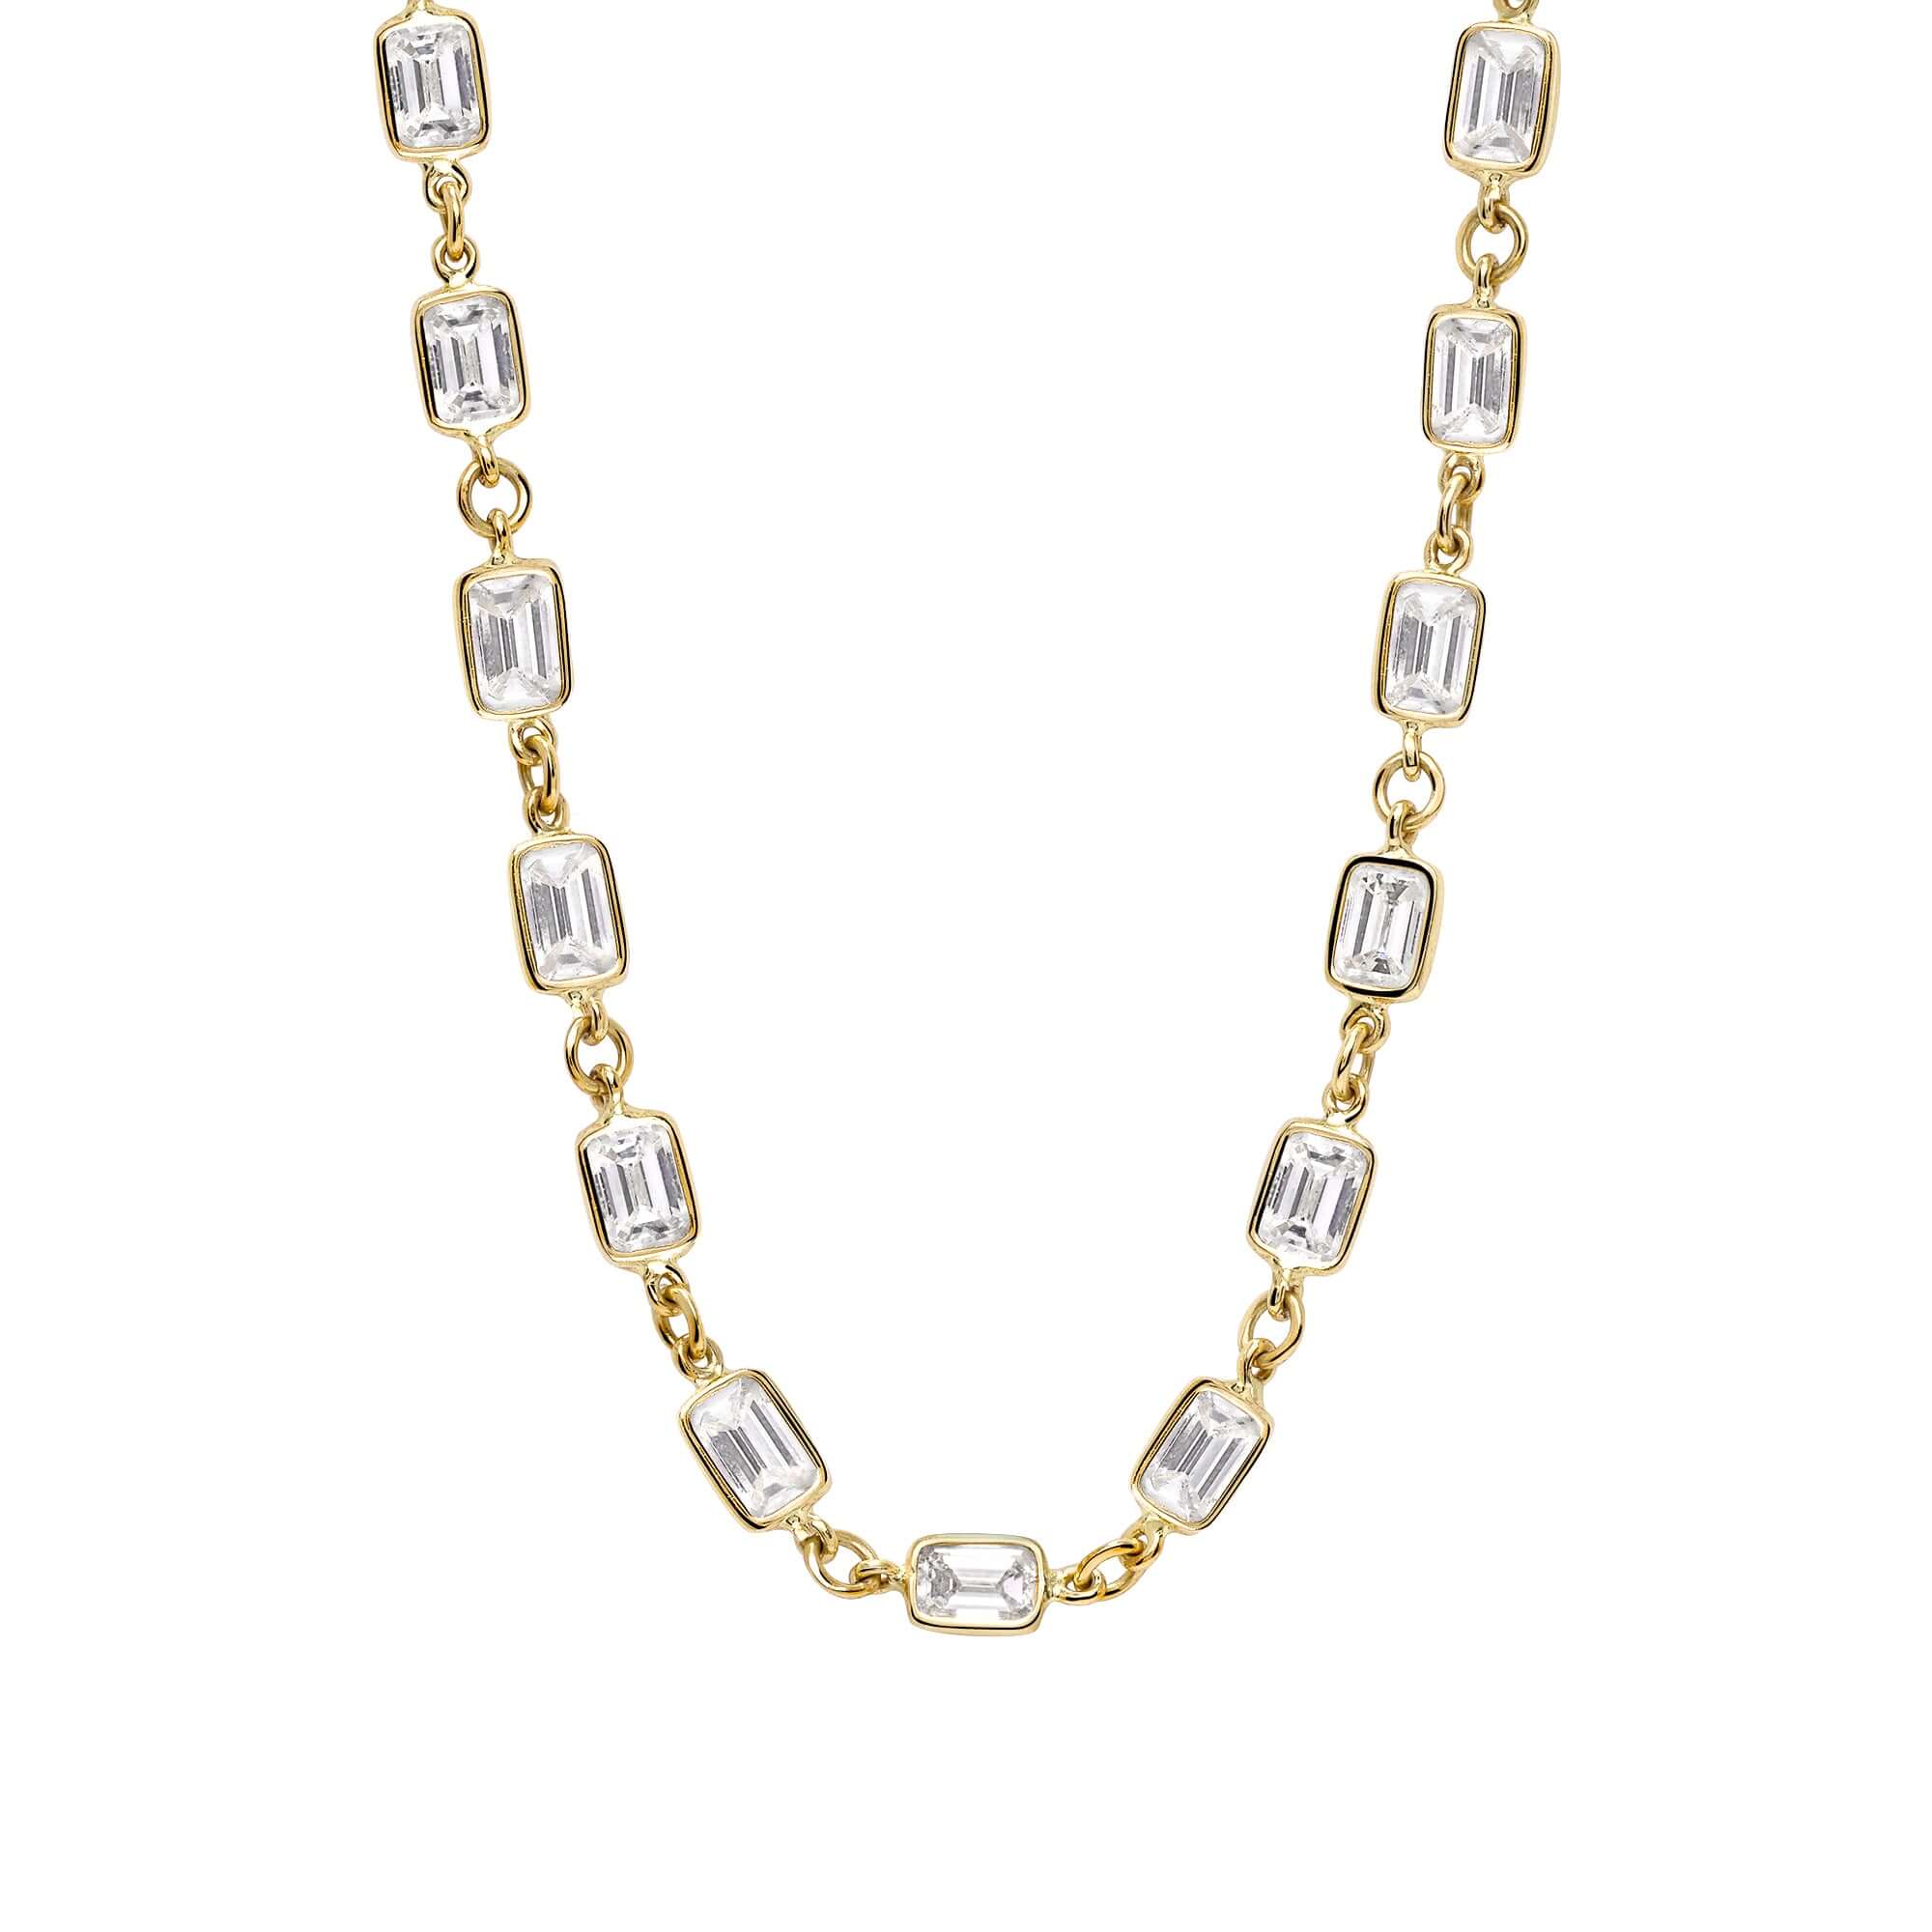 2.45 ct Emerald Cut Rose Quartz with Gemstones and Diamonds Necklace -  Sarah O.